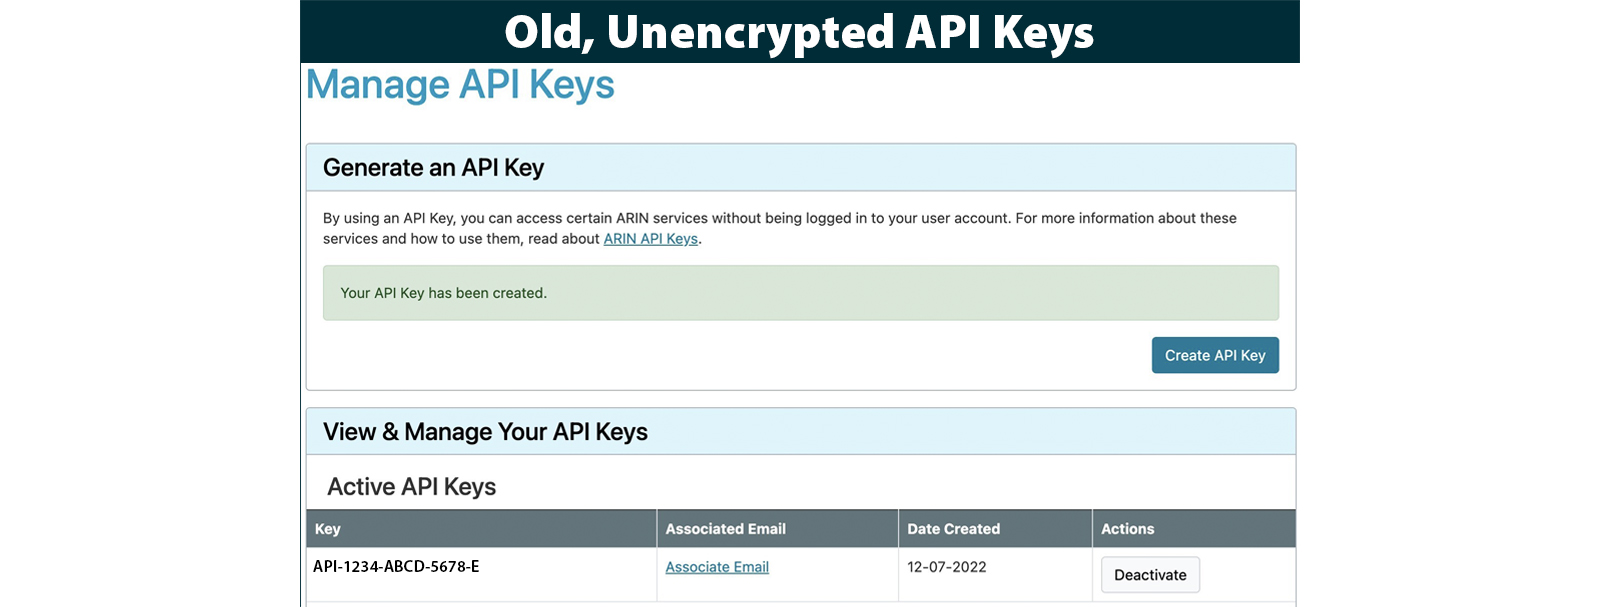 Old, Unencrypted API Keys Example